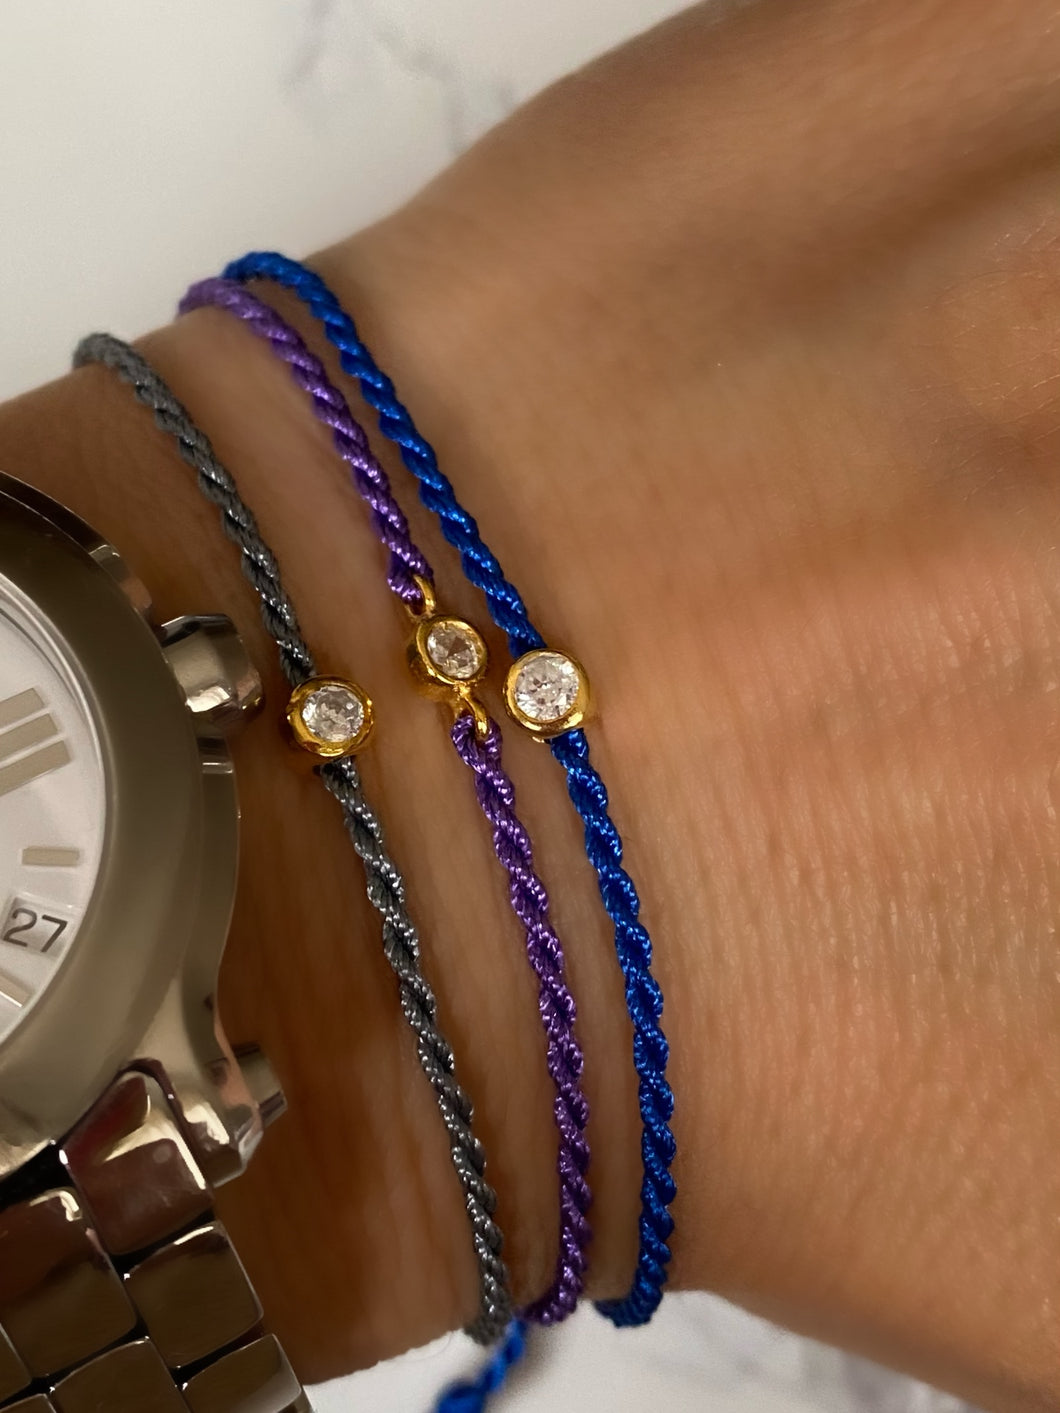 Friendship bracelets with single zircon stones